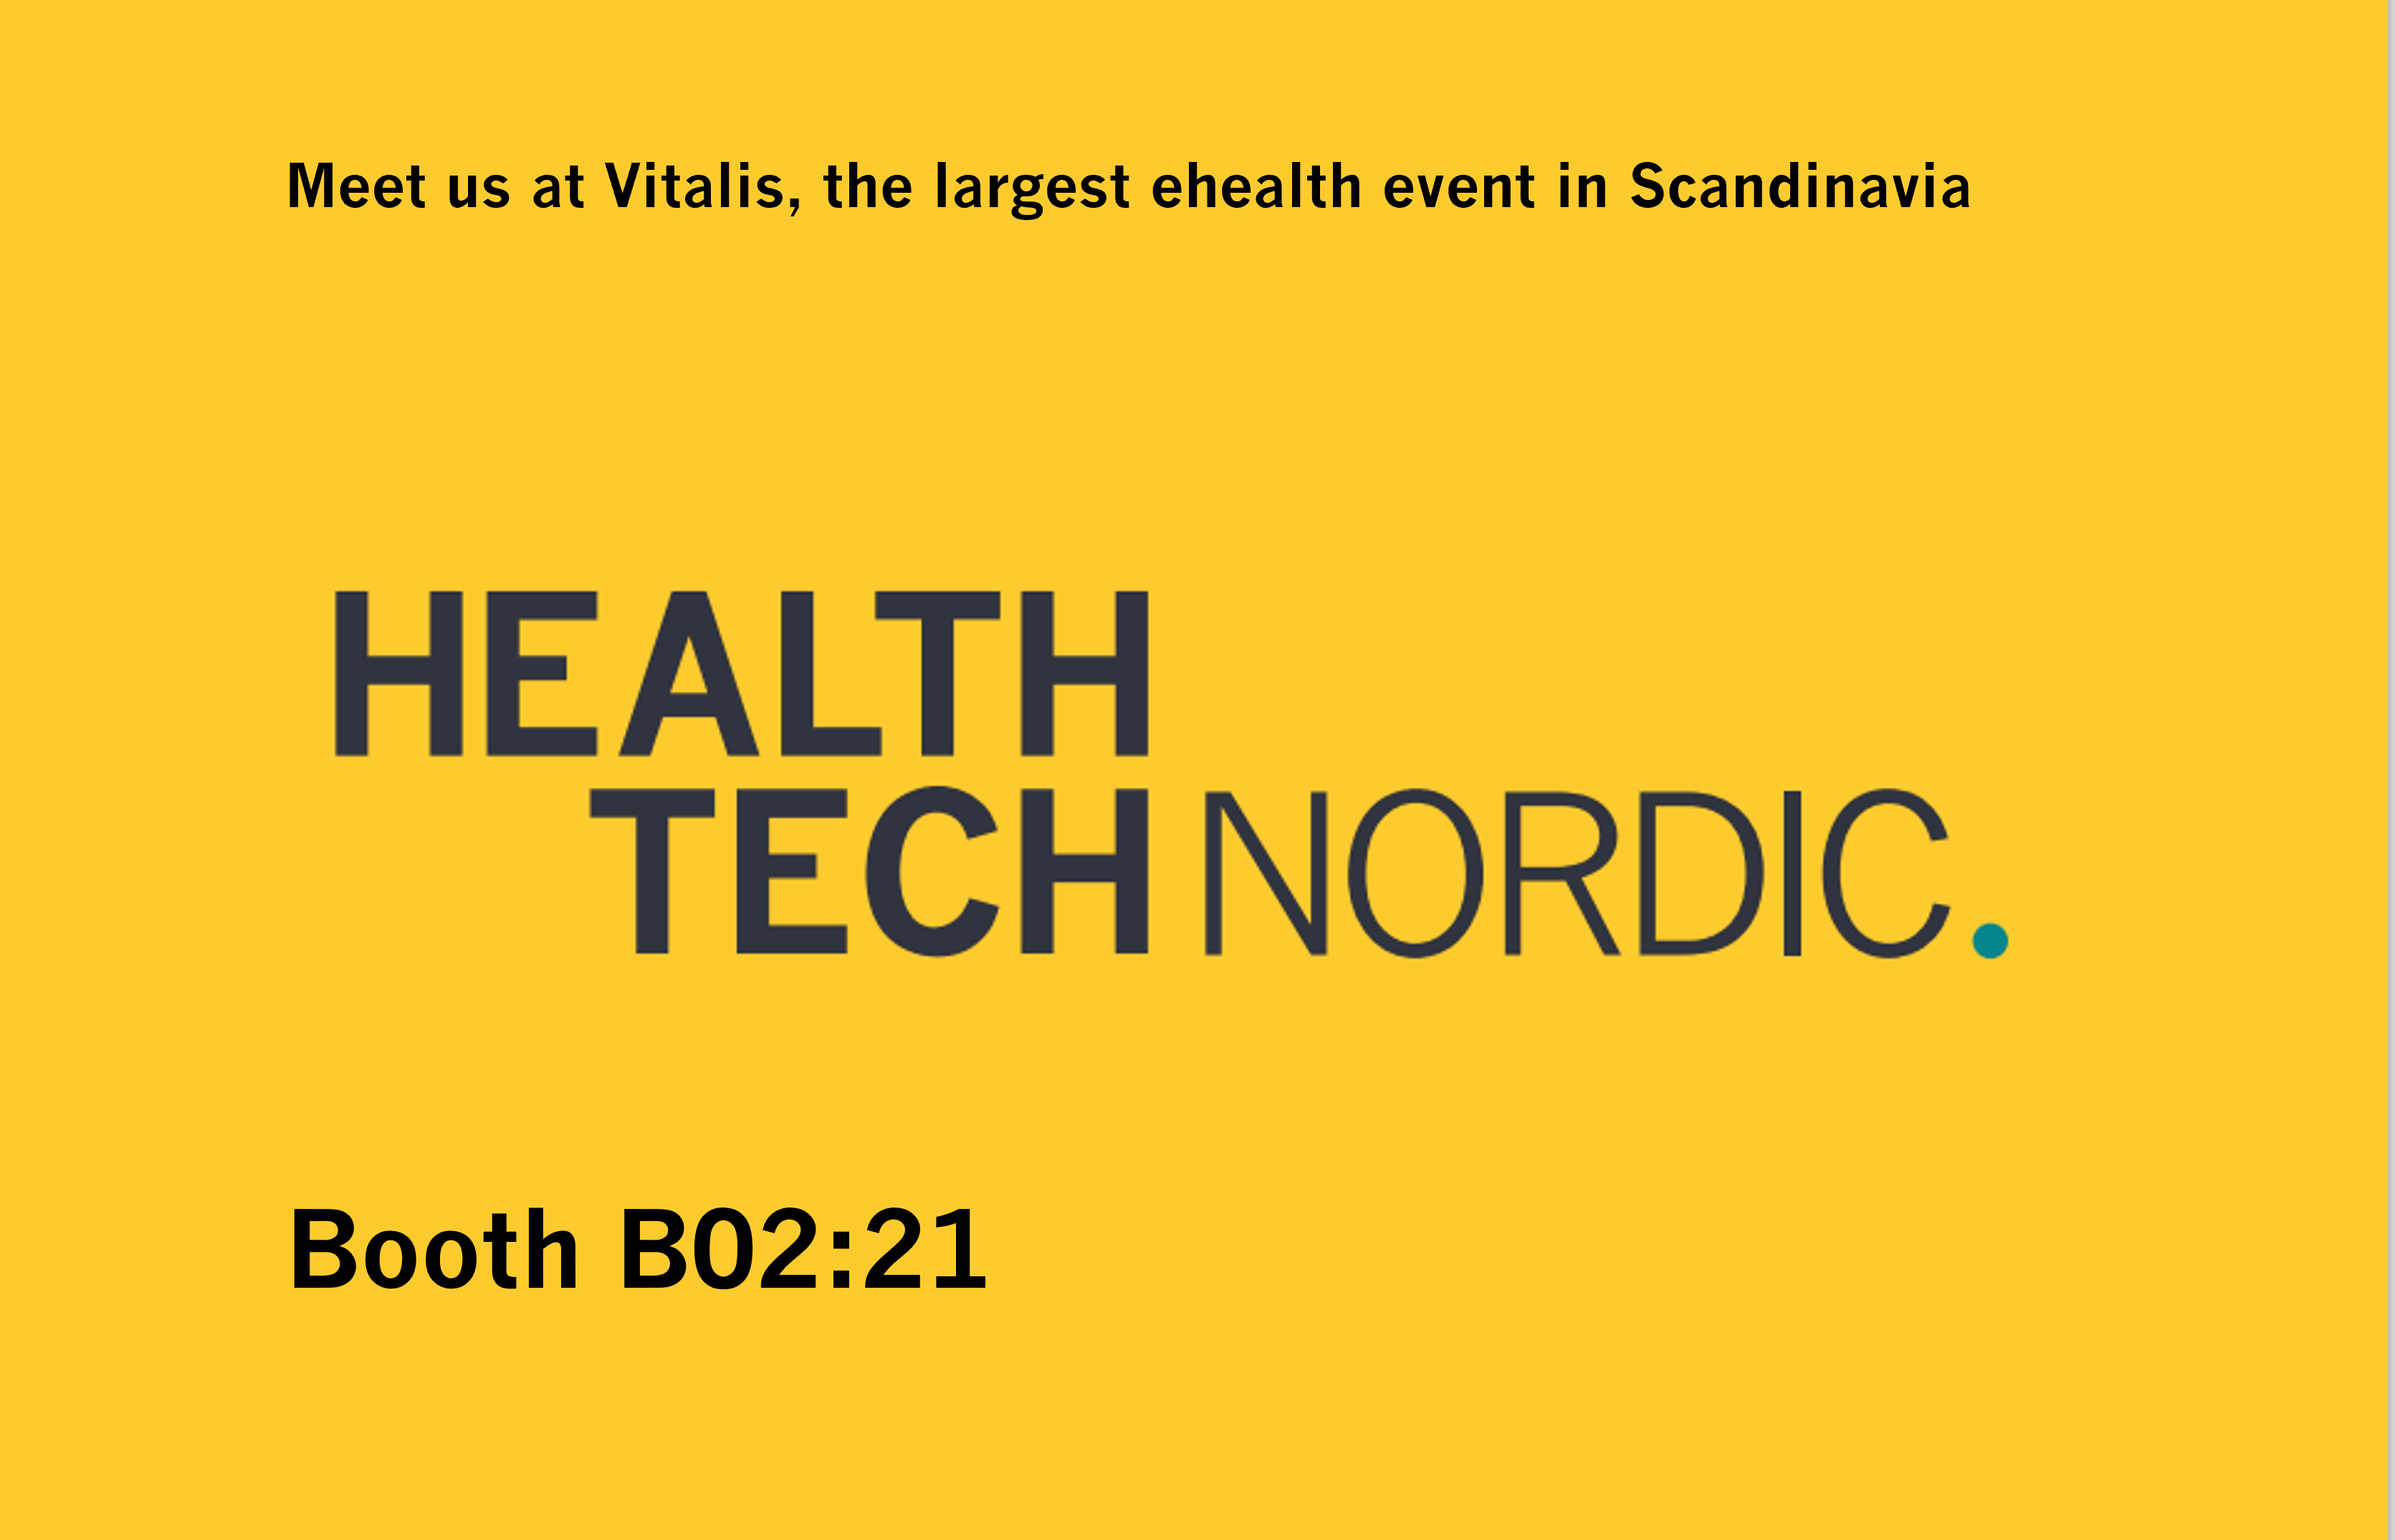 HealthTech Nordic at Vitalis